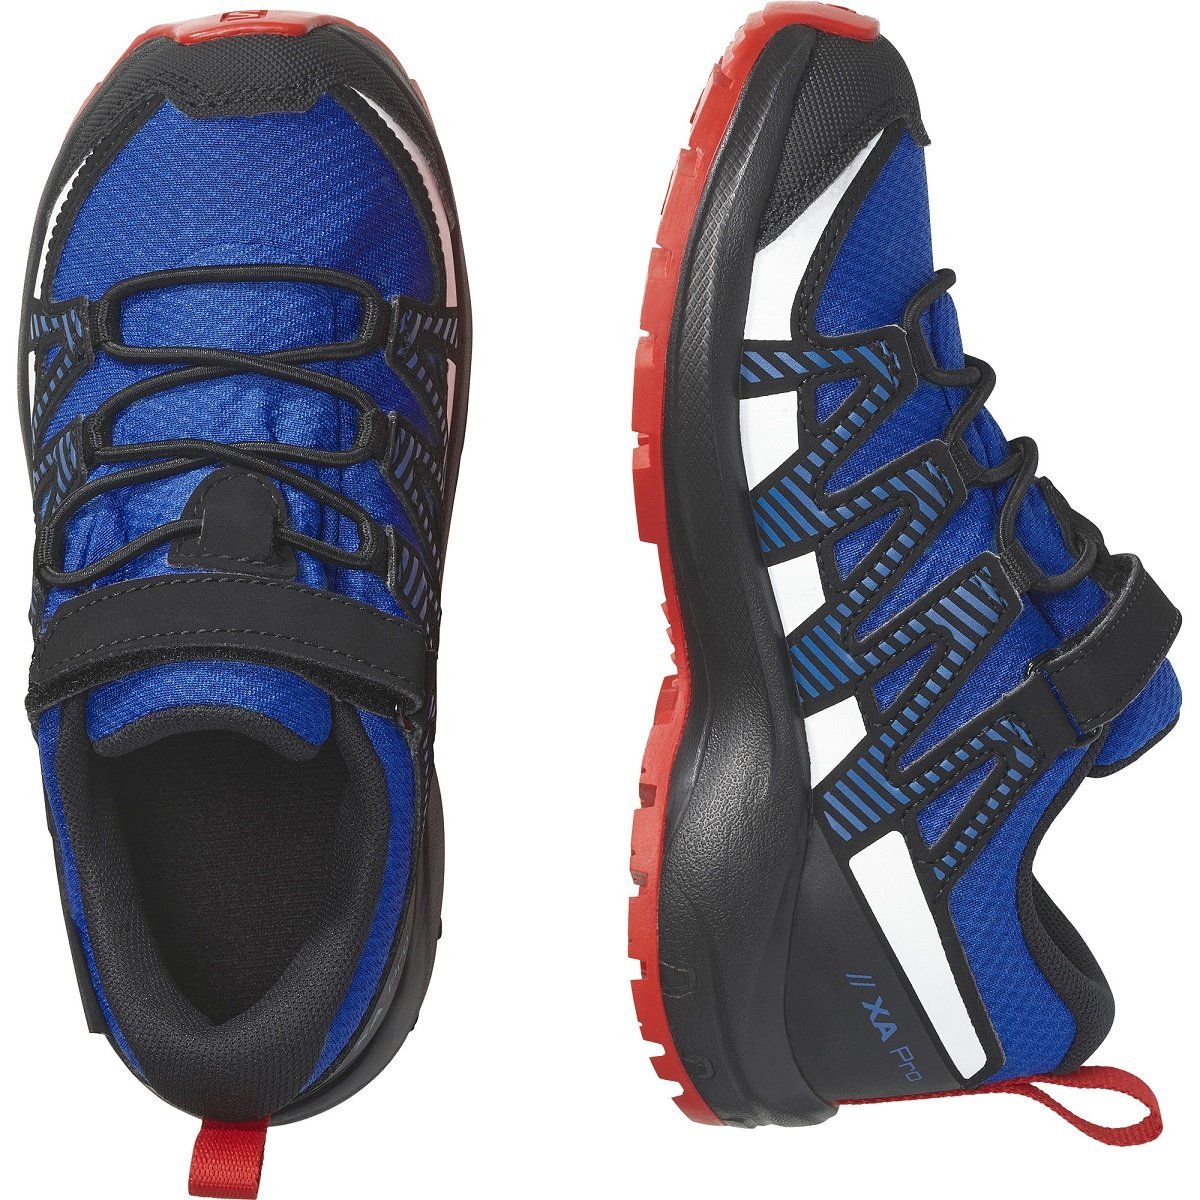 Topánky Salomon Xa Pro v8 Cswp J - blue/black/red